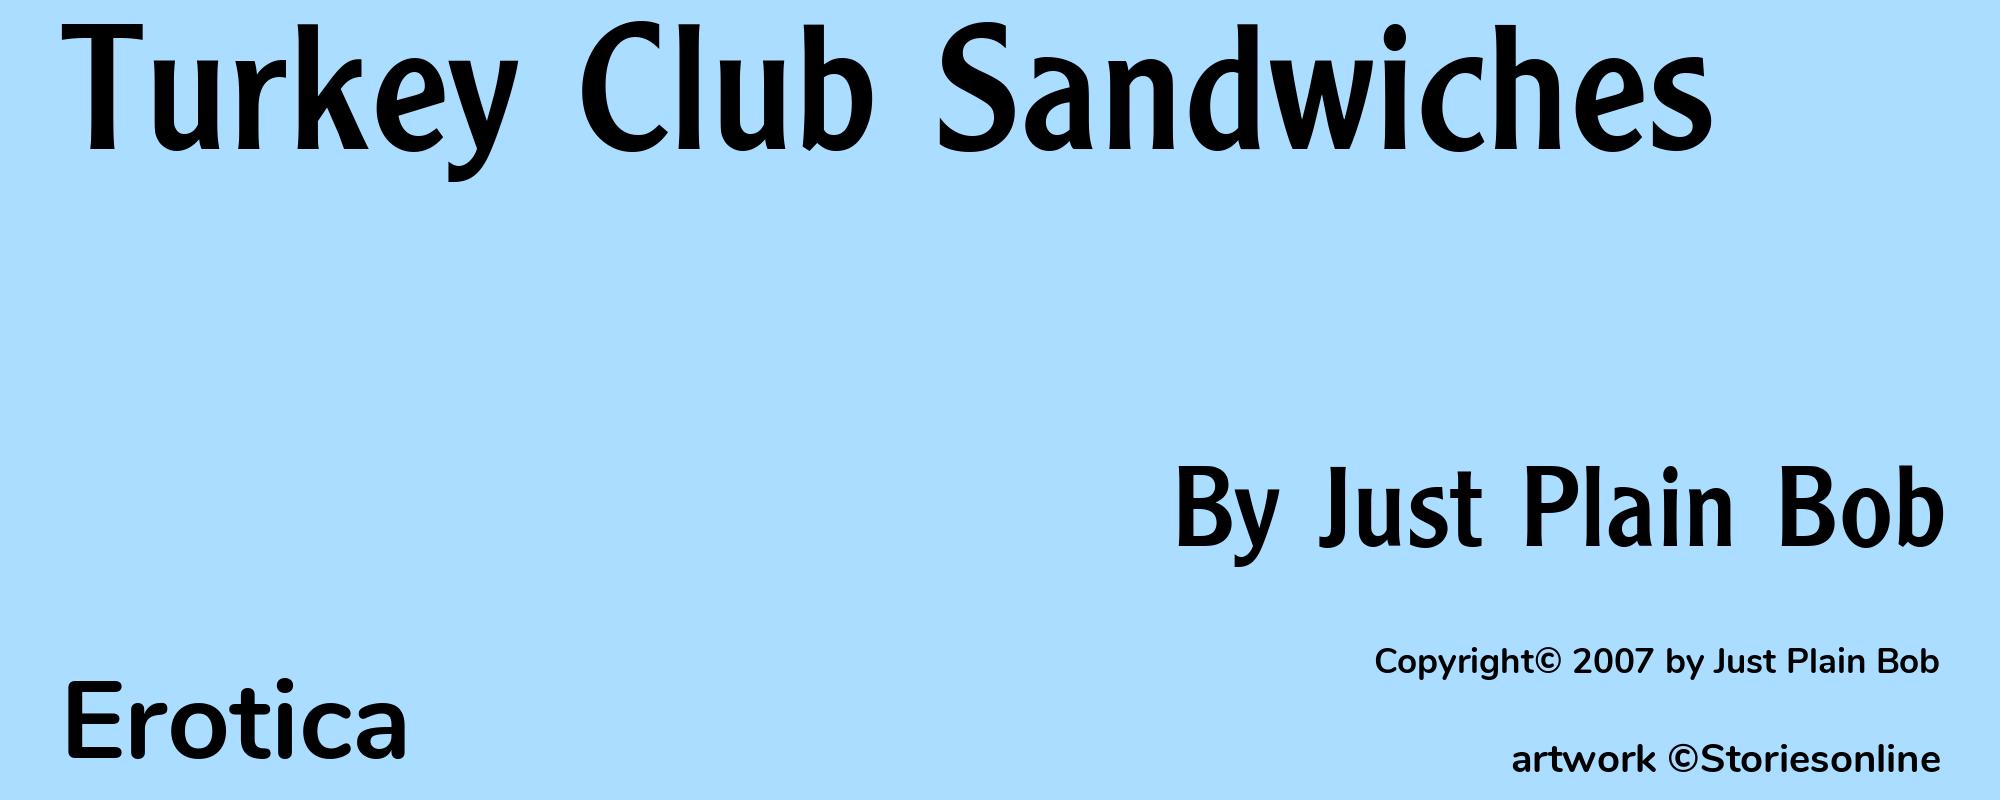 Turkey Club Sandwiches - Cover